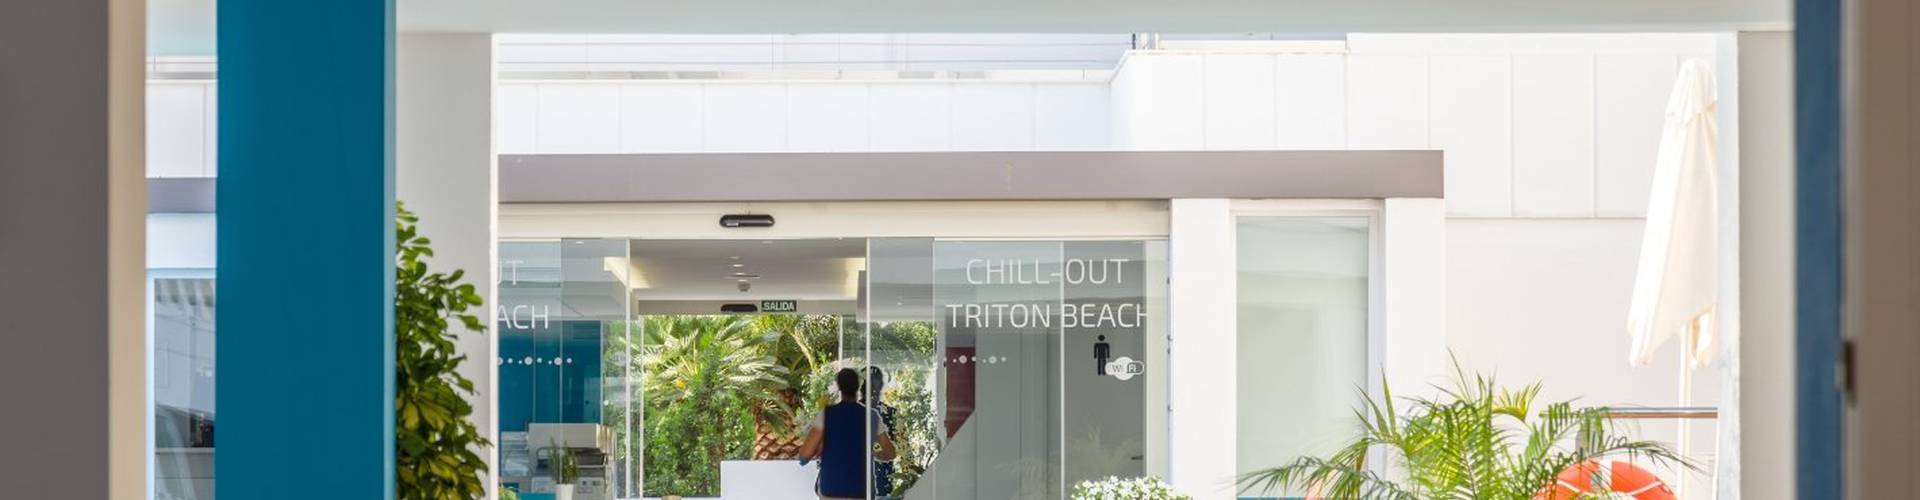 Hotel Triton - Cala Ratjada - Aviso legal Hotel Tritón Beach